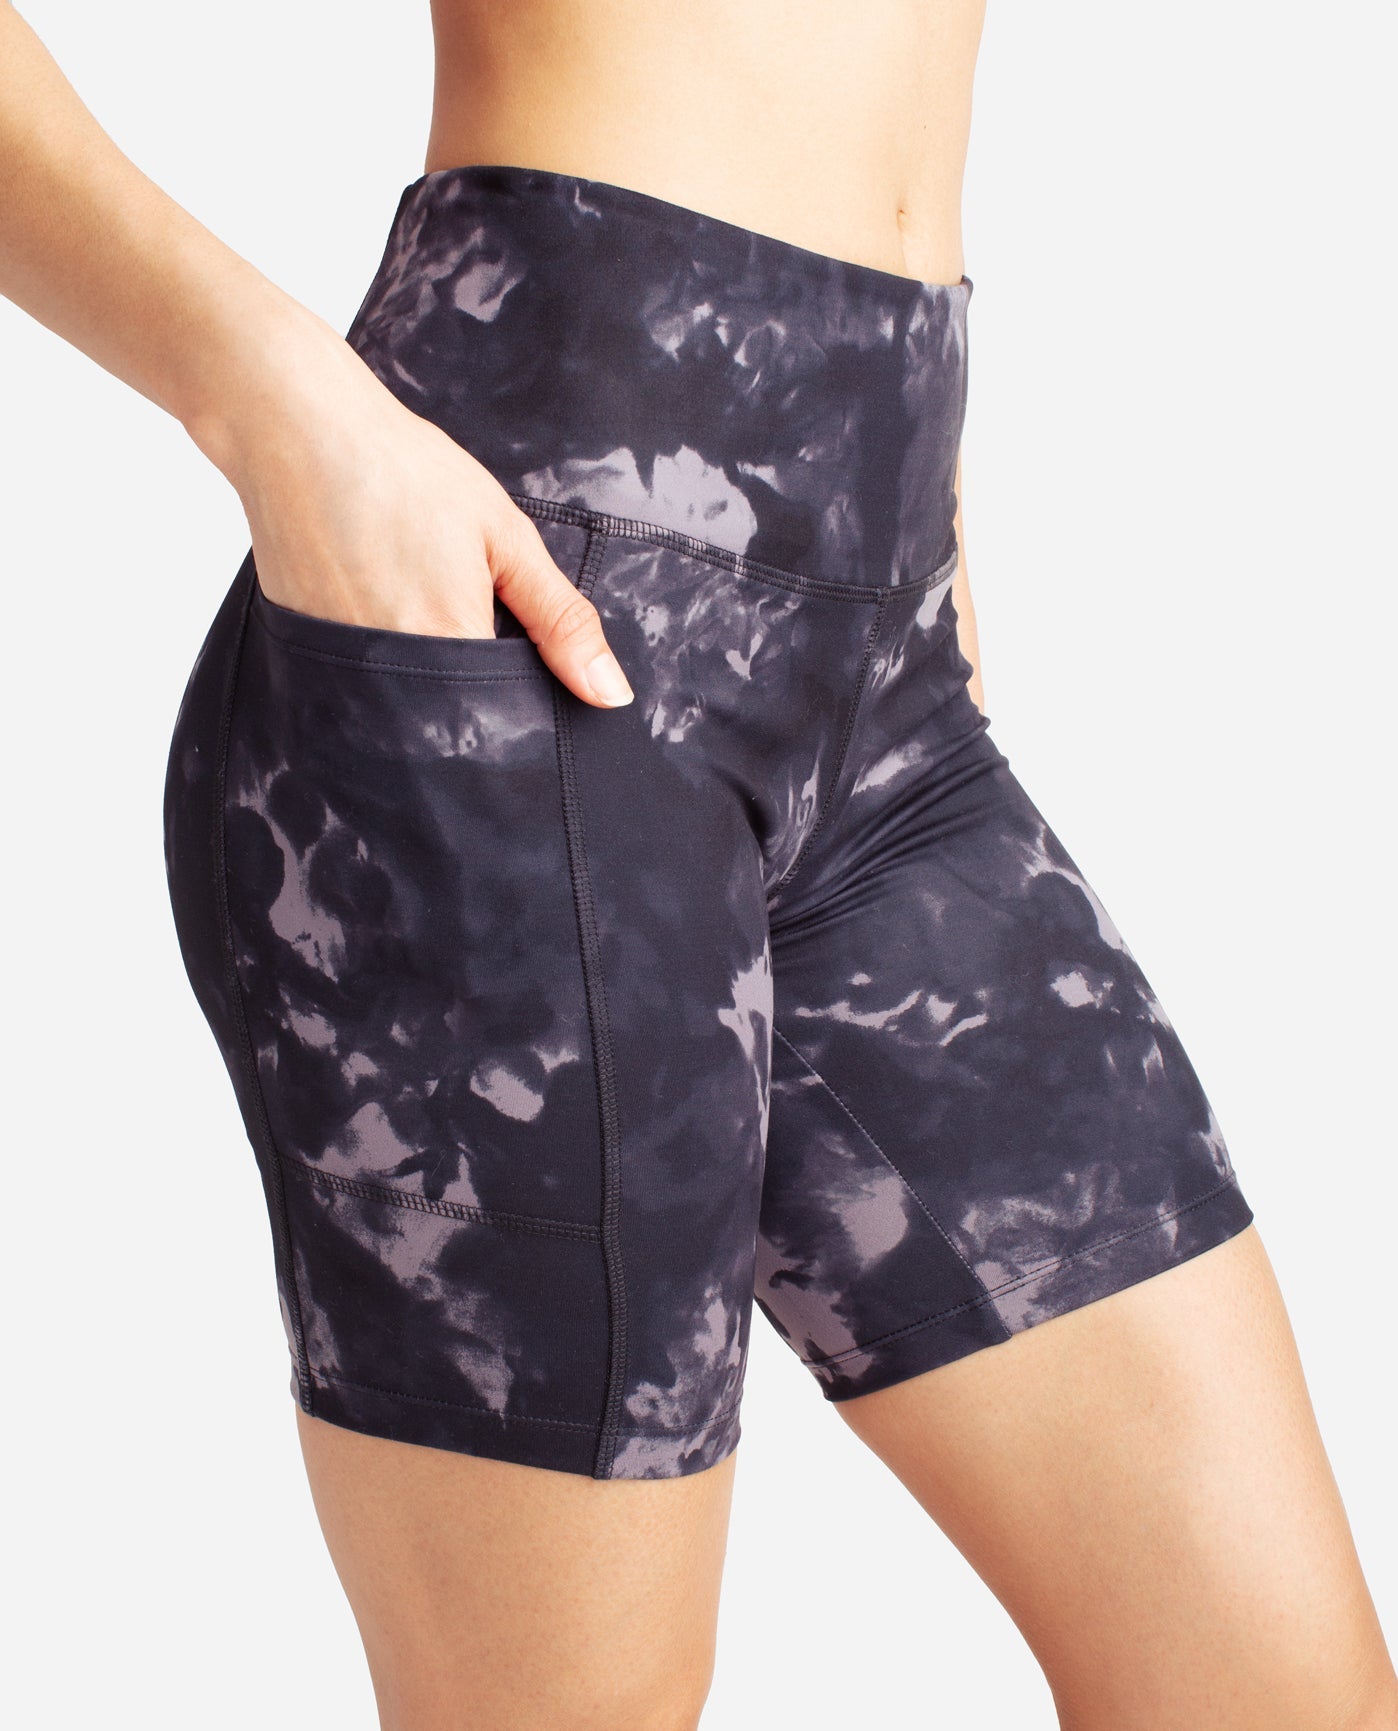 Walmart.com: Danskin Women's Bike Shorts 2-Pack Only $6 (Regularly